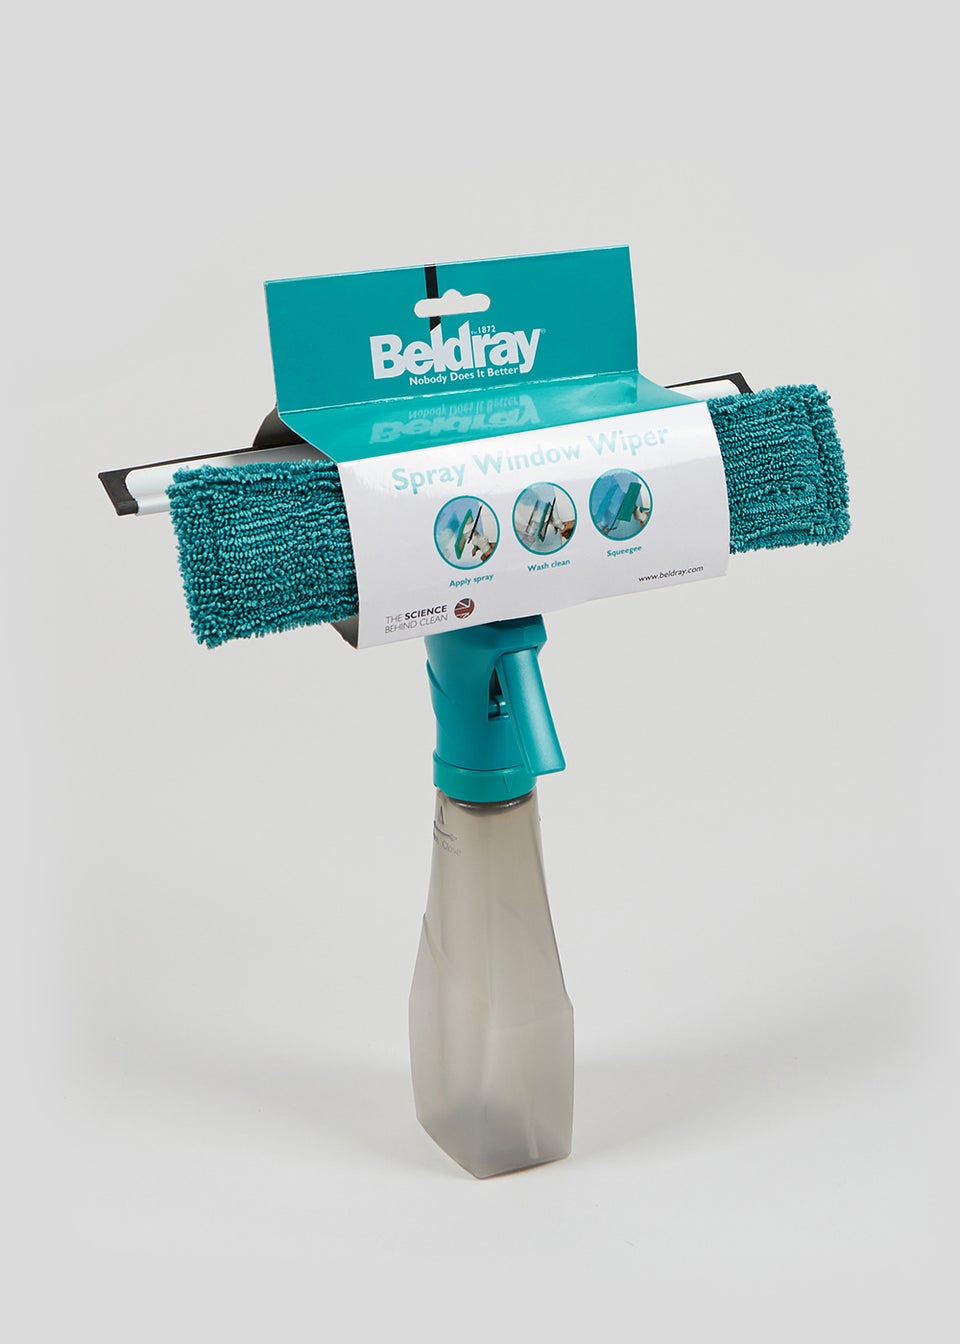 Beldray Spray Window Wiper (33cm x 26cm x 10cm)